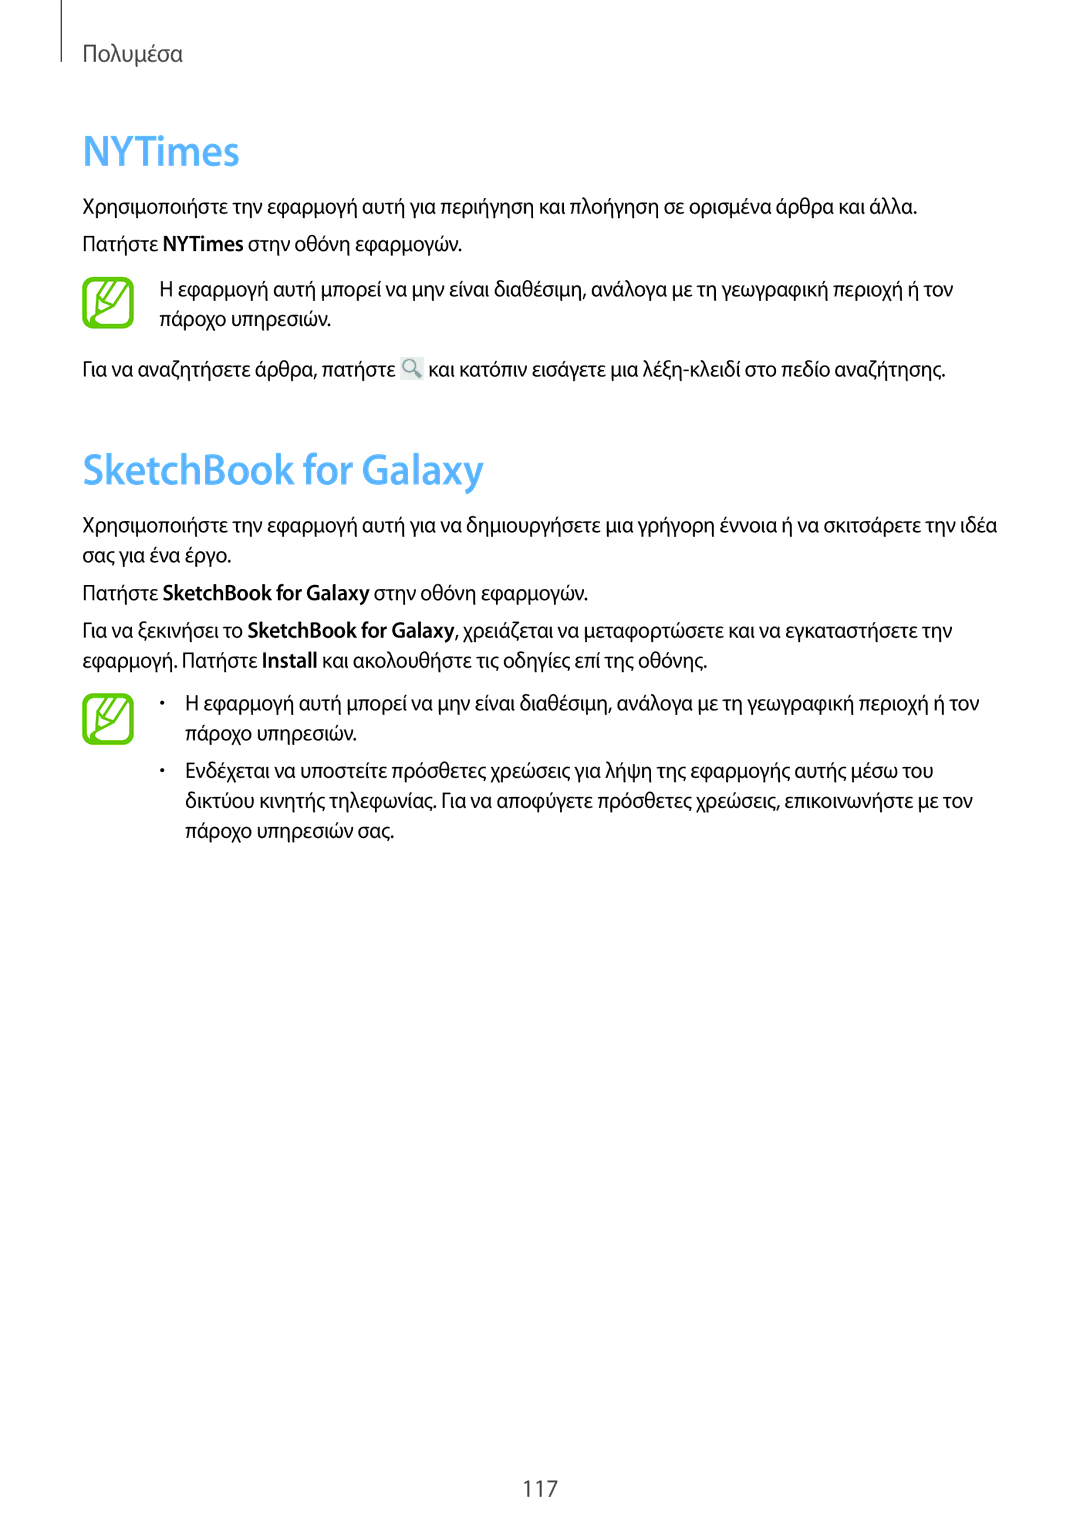 Samsung SM-P9050ZWYEUR, SM-P9050ZWAEUR, SM-P9050ZKYEUR, SM-P9050ZKAEUR manual NYTimes, SketchBook for Galaxy 